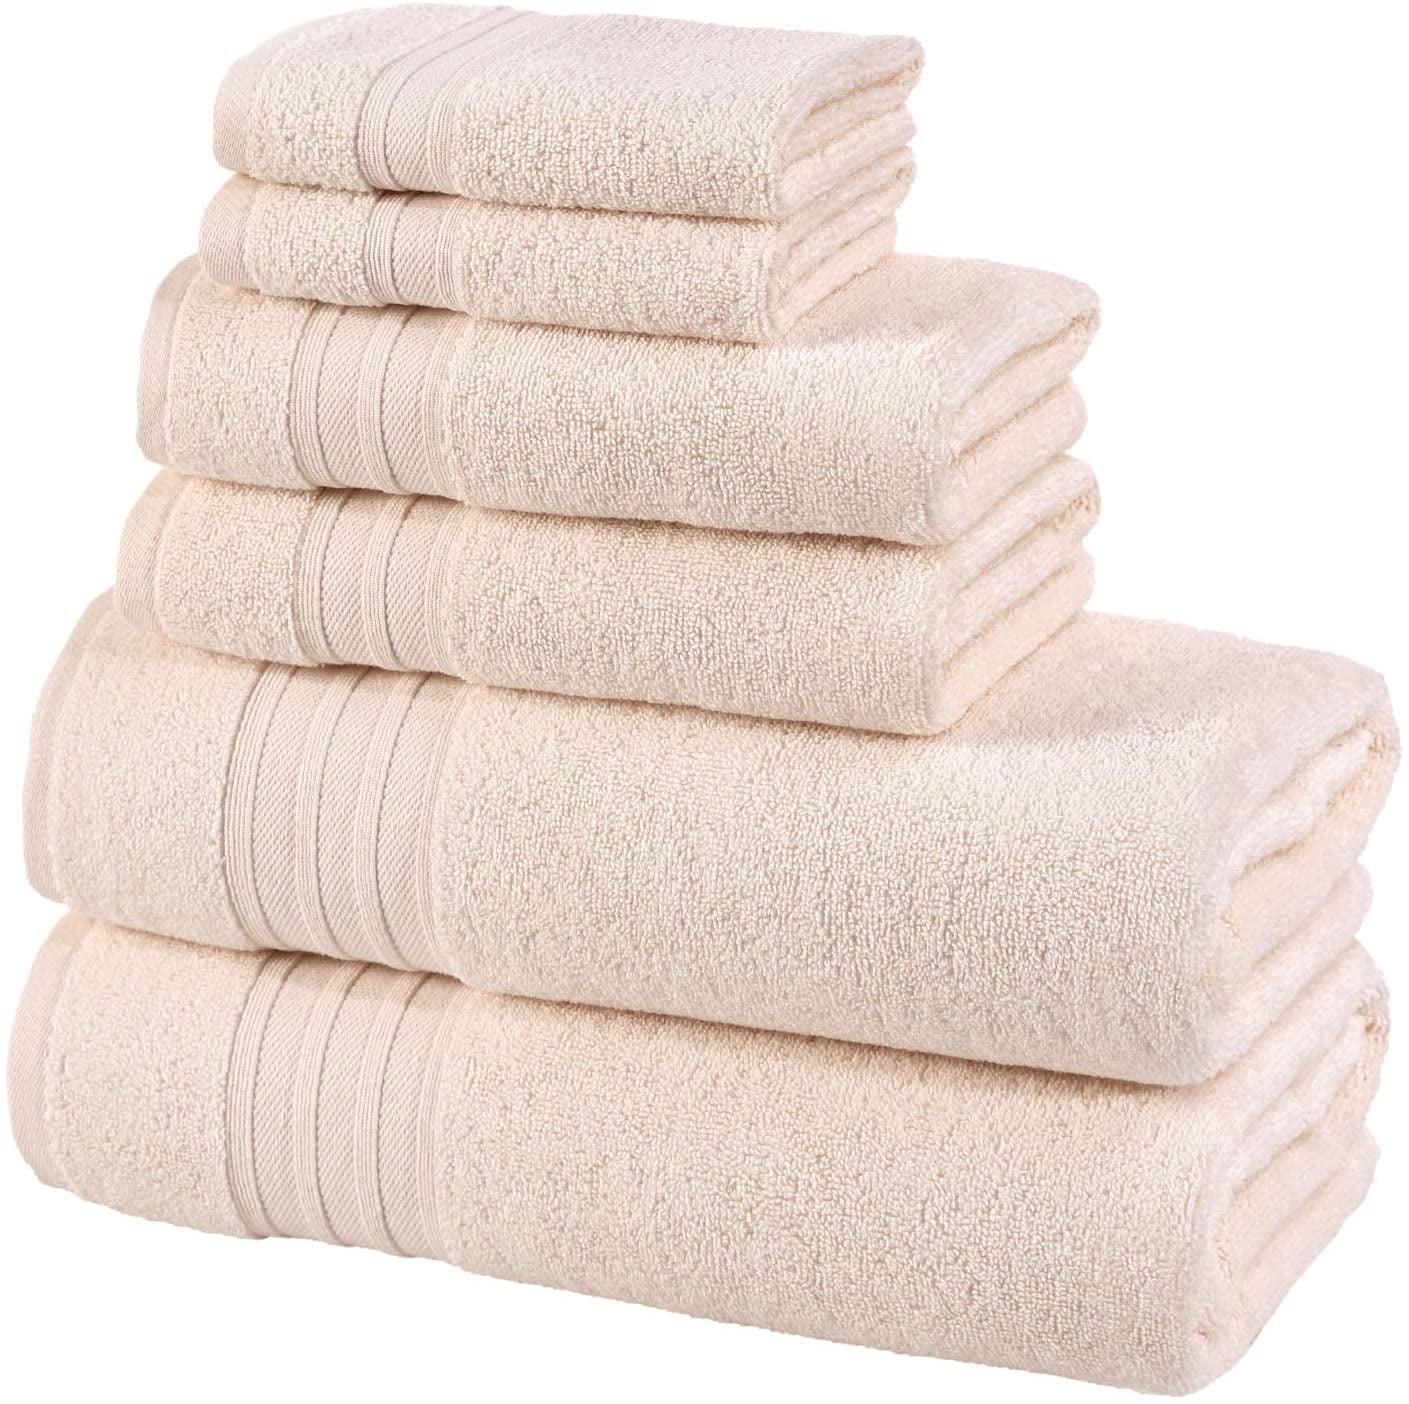 Bath Towel 3 Pieces Set Bathroom Spa Swimming Towels 60% Cotton Luxurious Towels